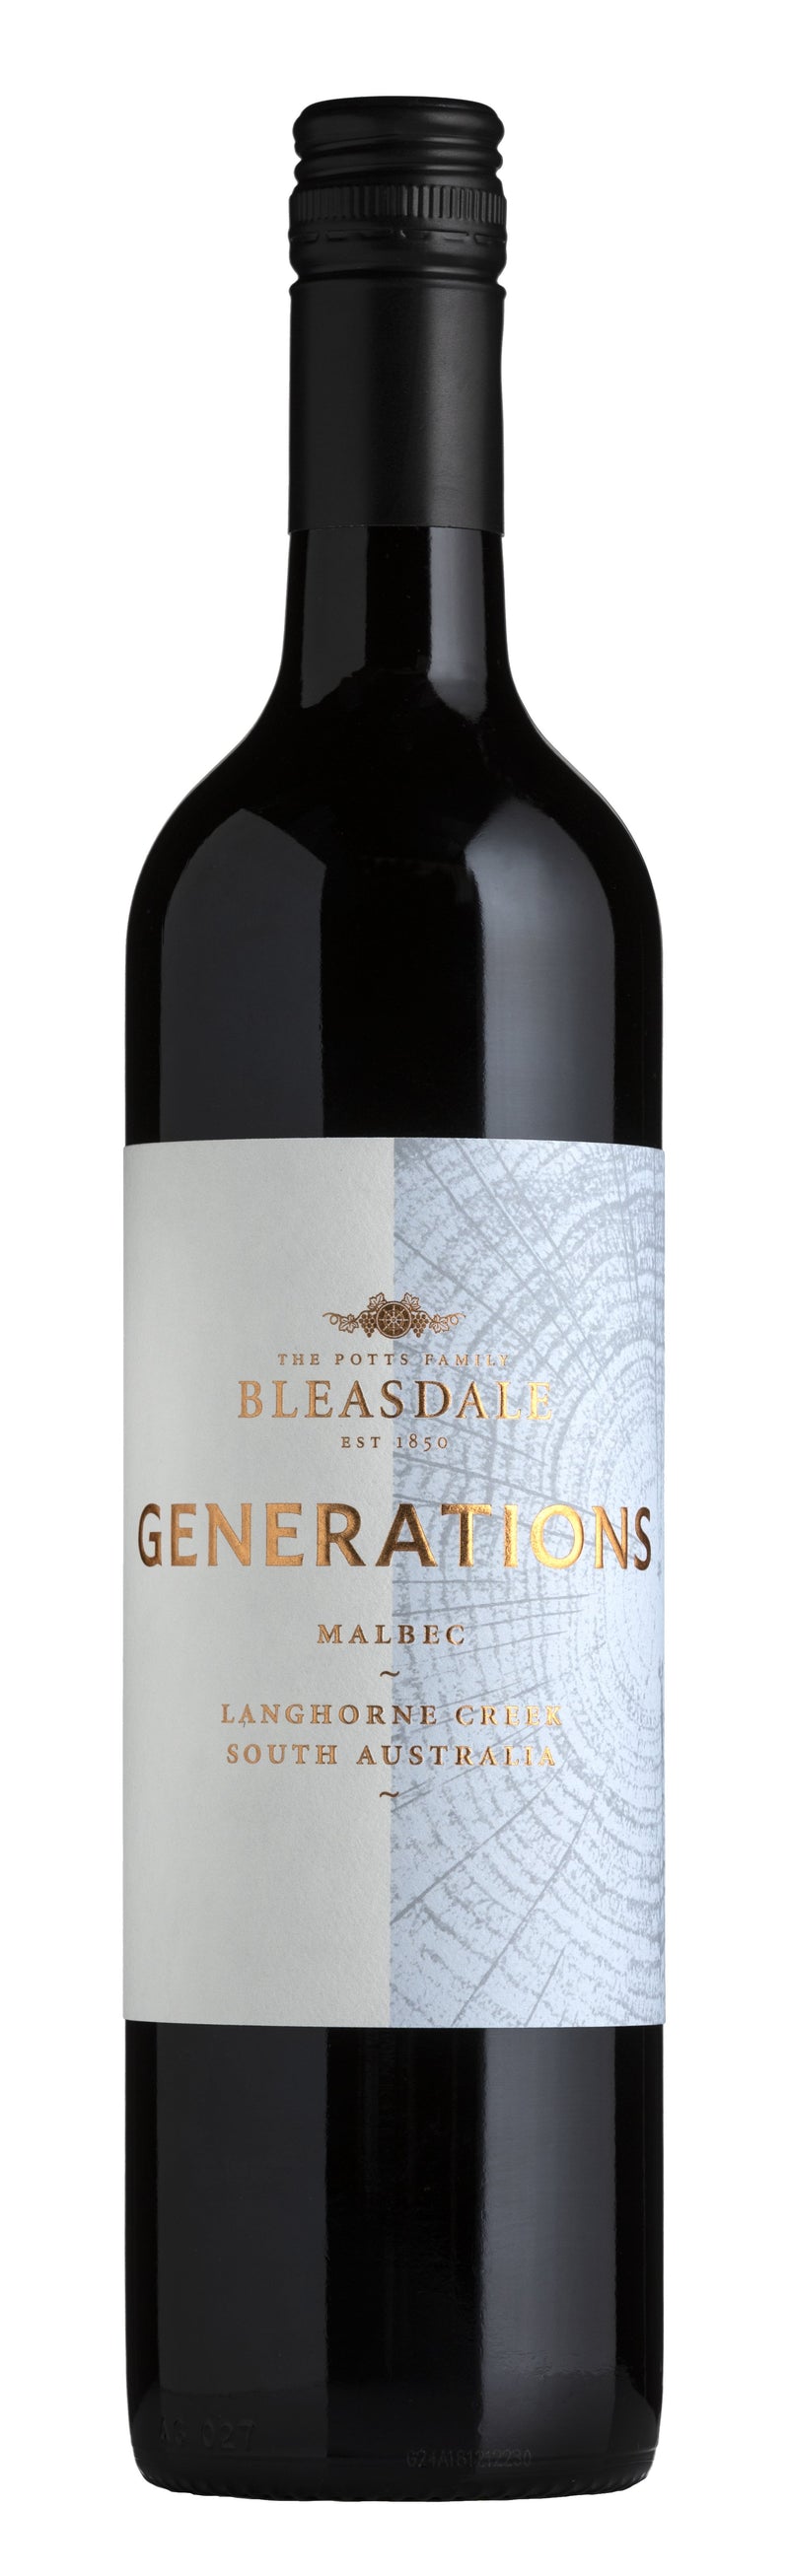 Bleasdale 2018 Generations Malbec